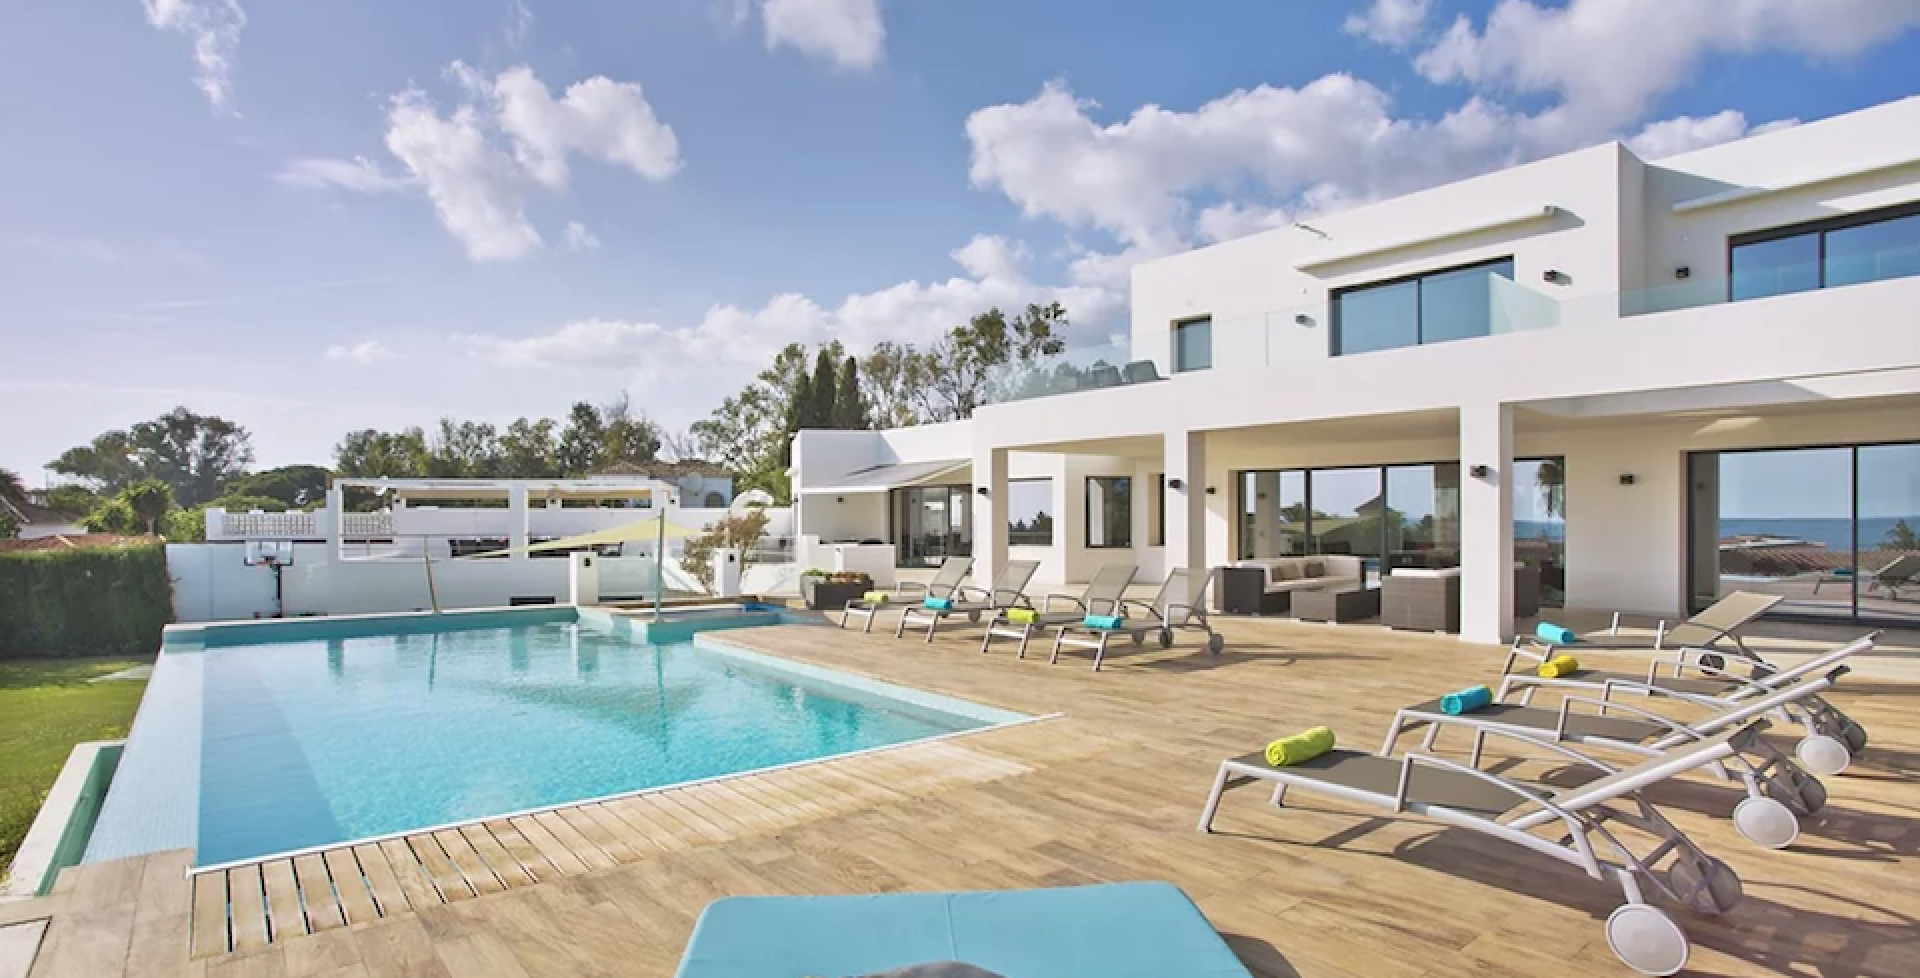 Villa Seaview Marbella 8 bedrooms villa and infinity pool